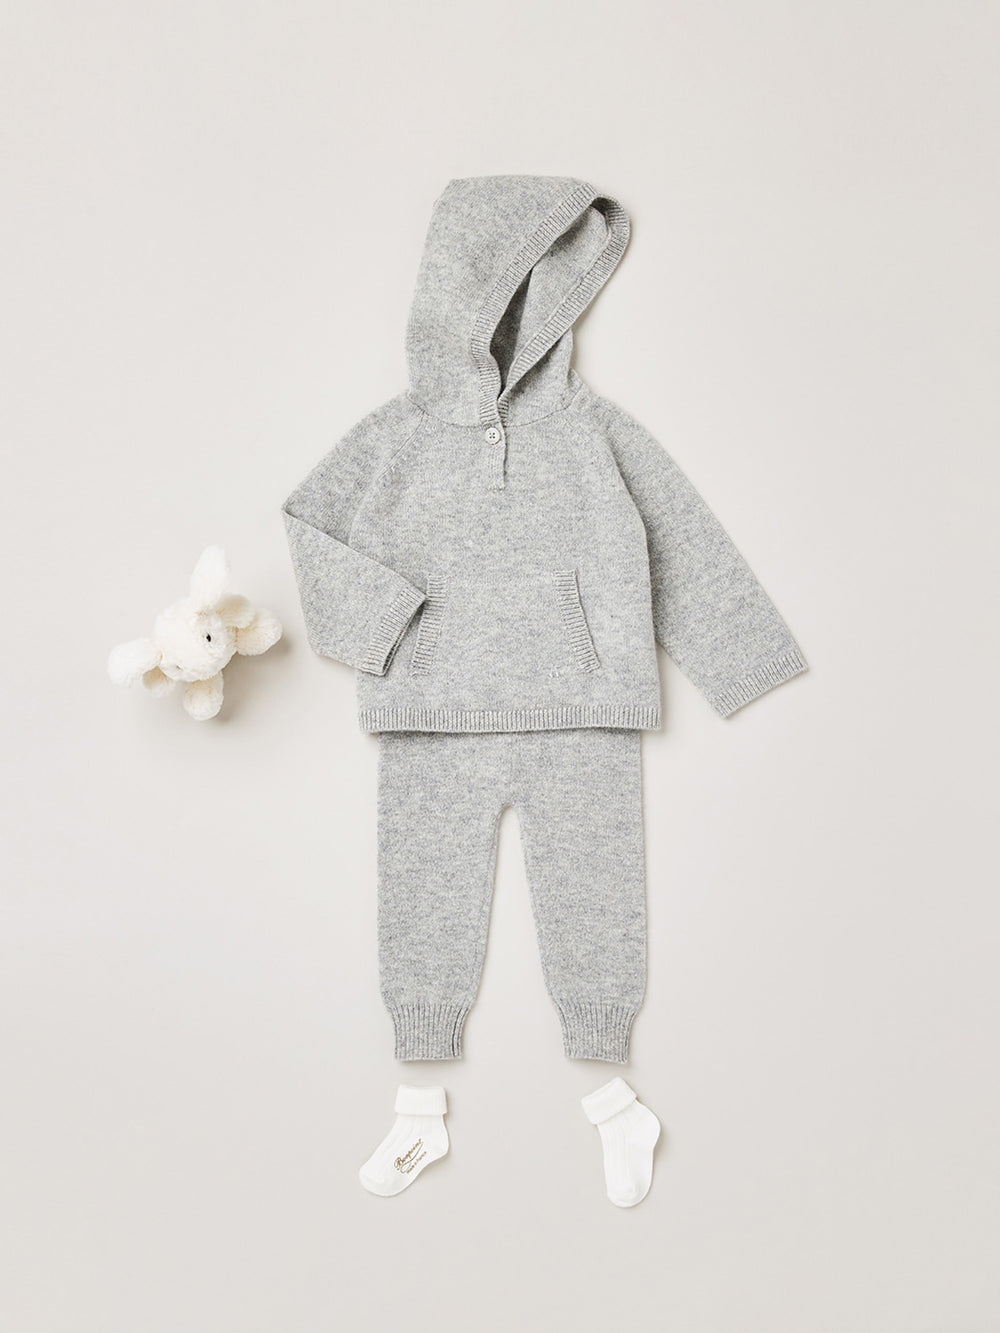 Baby Cashmere Sweater heathered gray